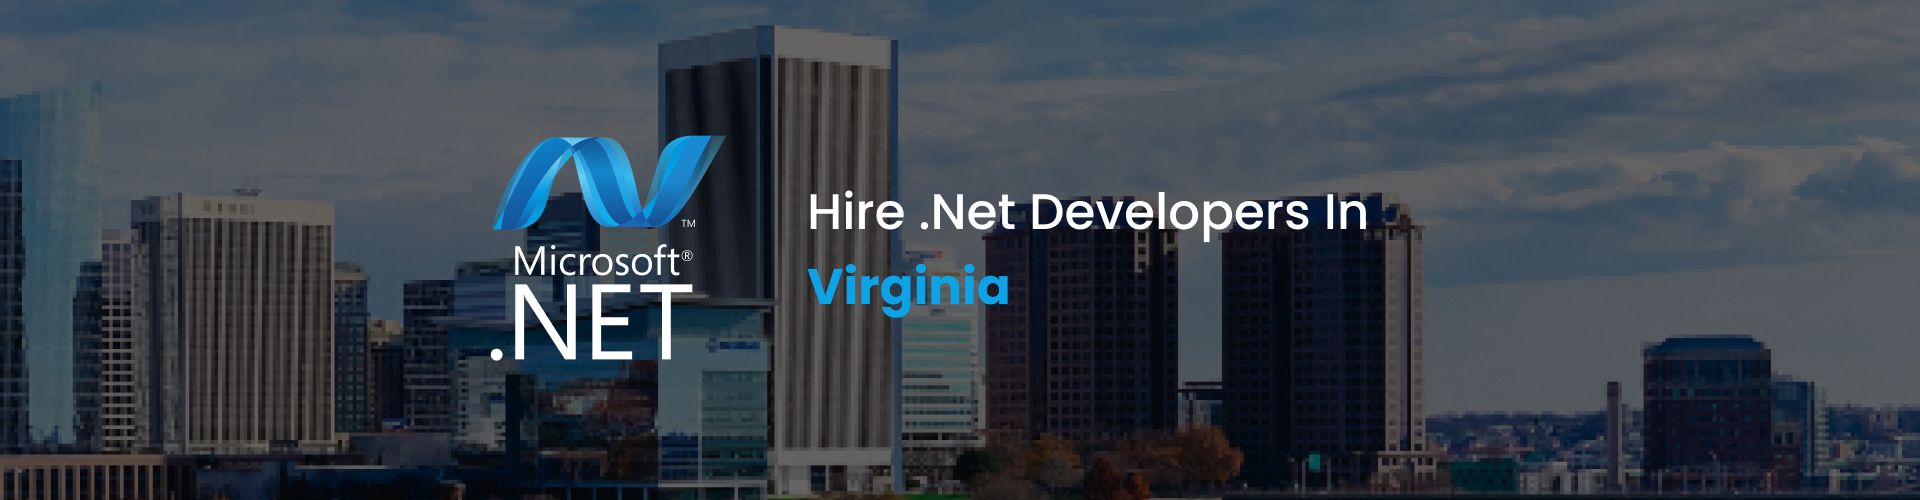 hire dot net developers in virginia